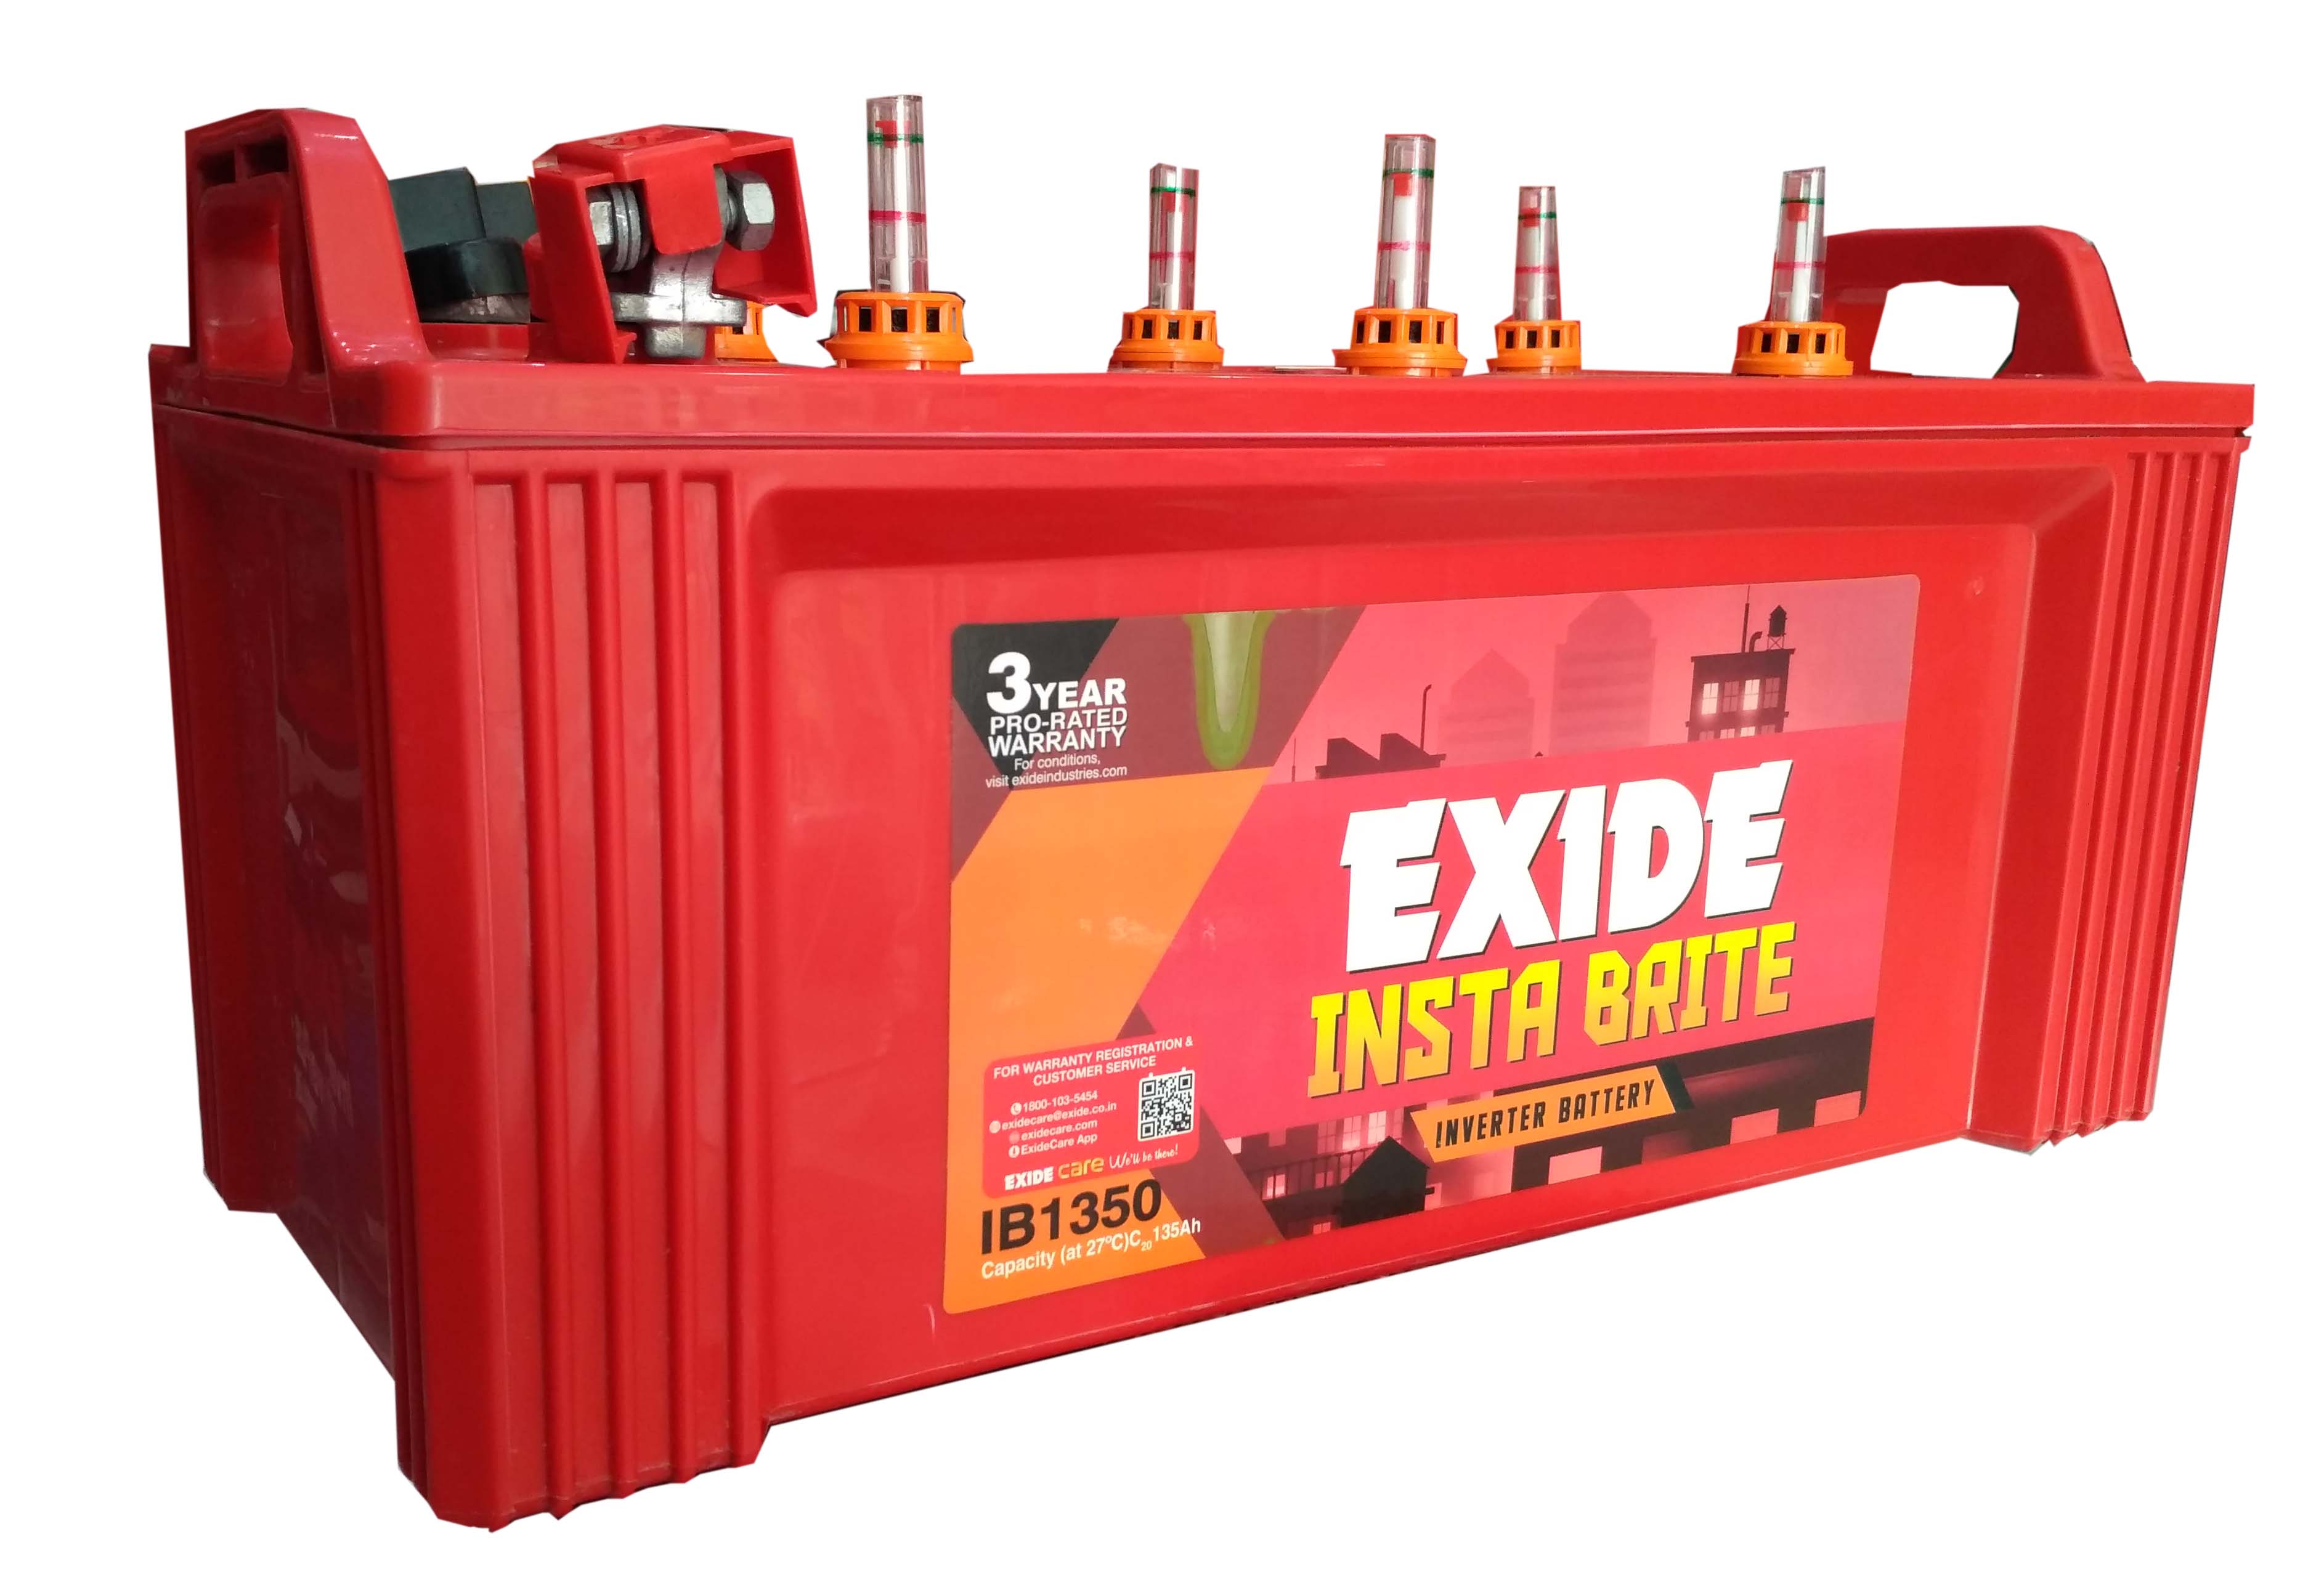 Exide Instabrite inverter Battery